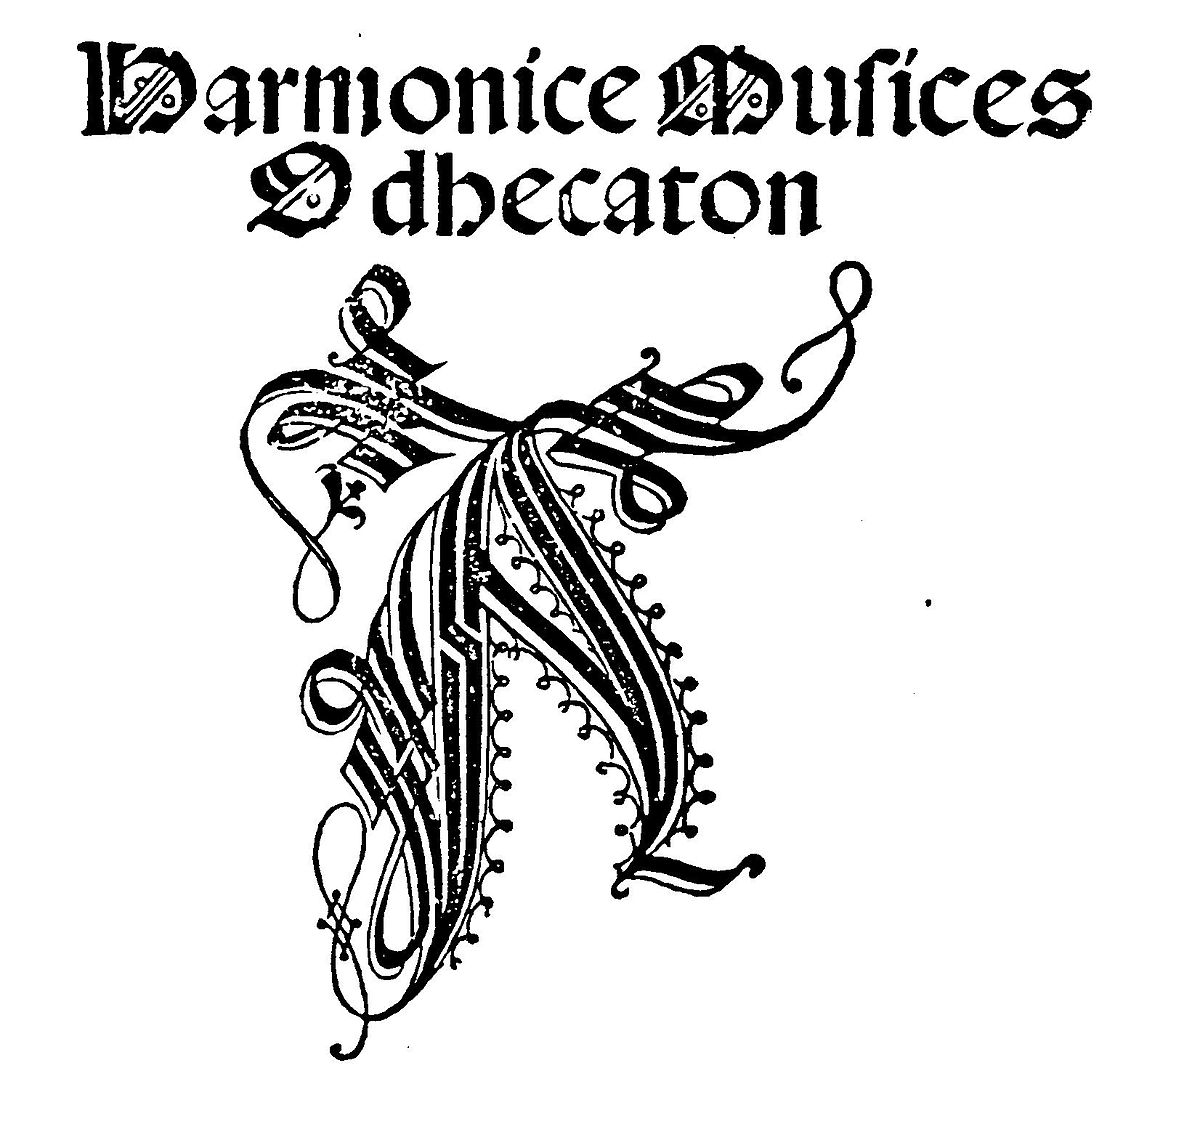 Harmonice Musices Odhecaton - Wikipedia